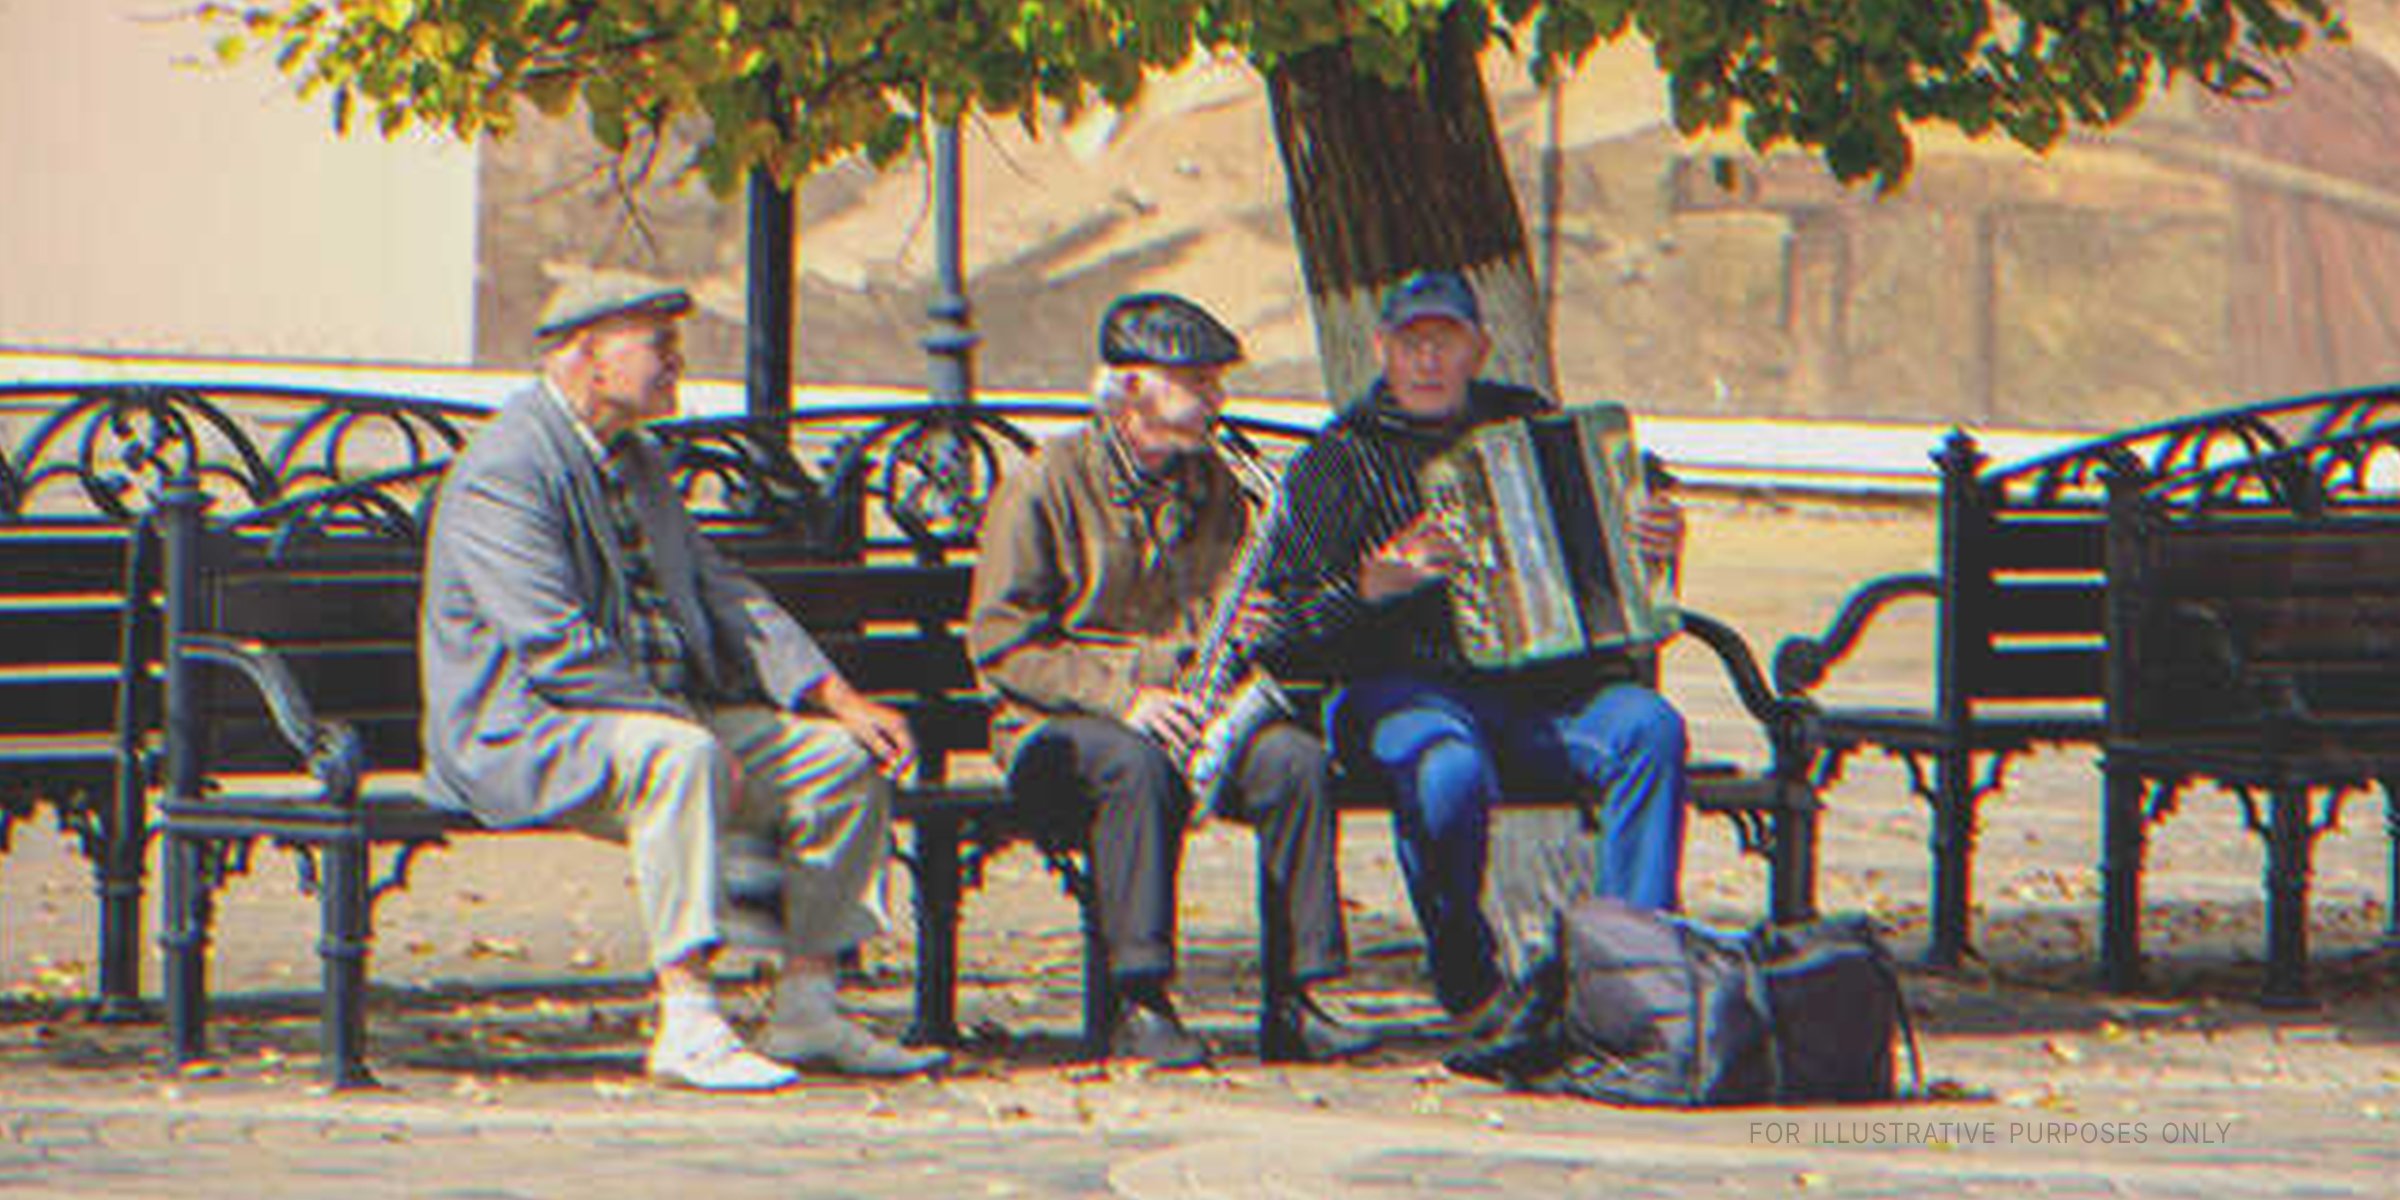 Three elderly men playing music on the street | Source: Shutterstock